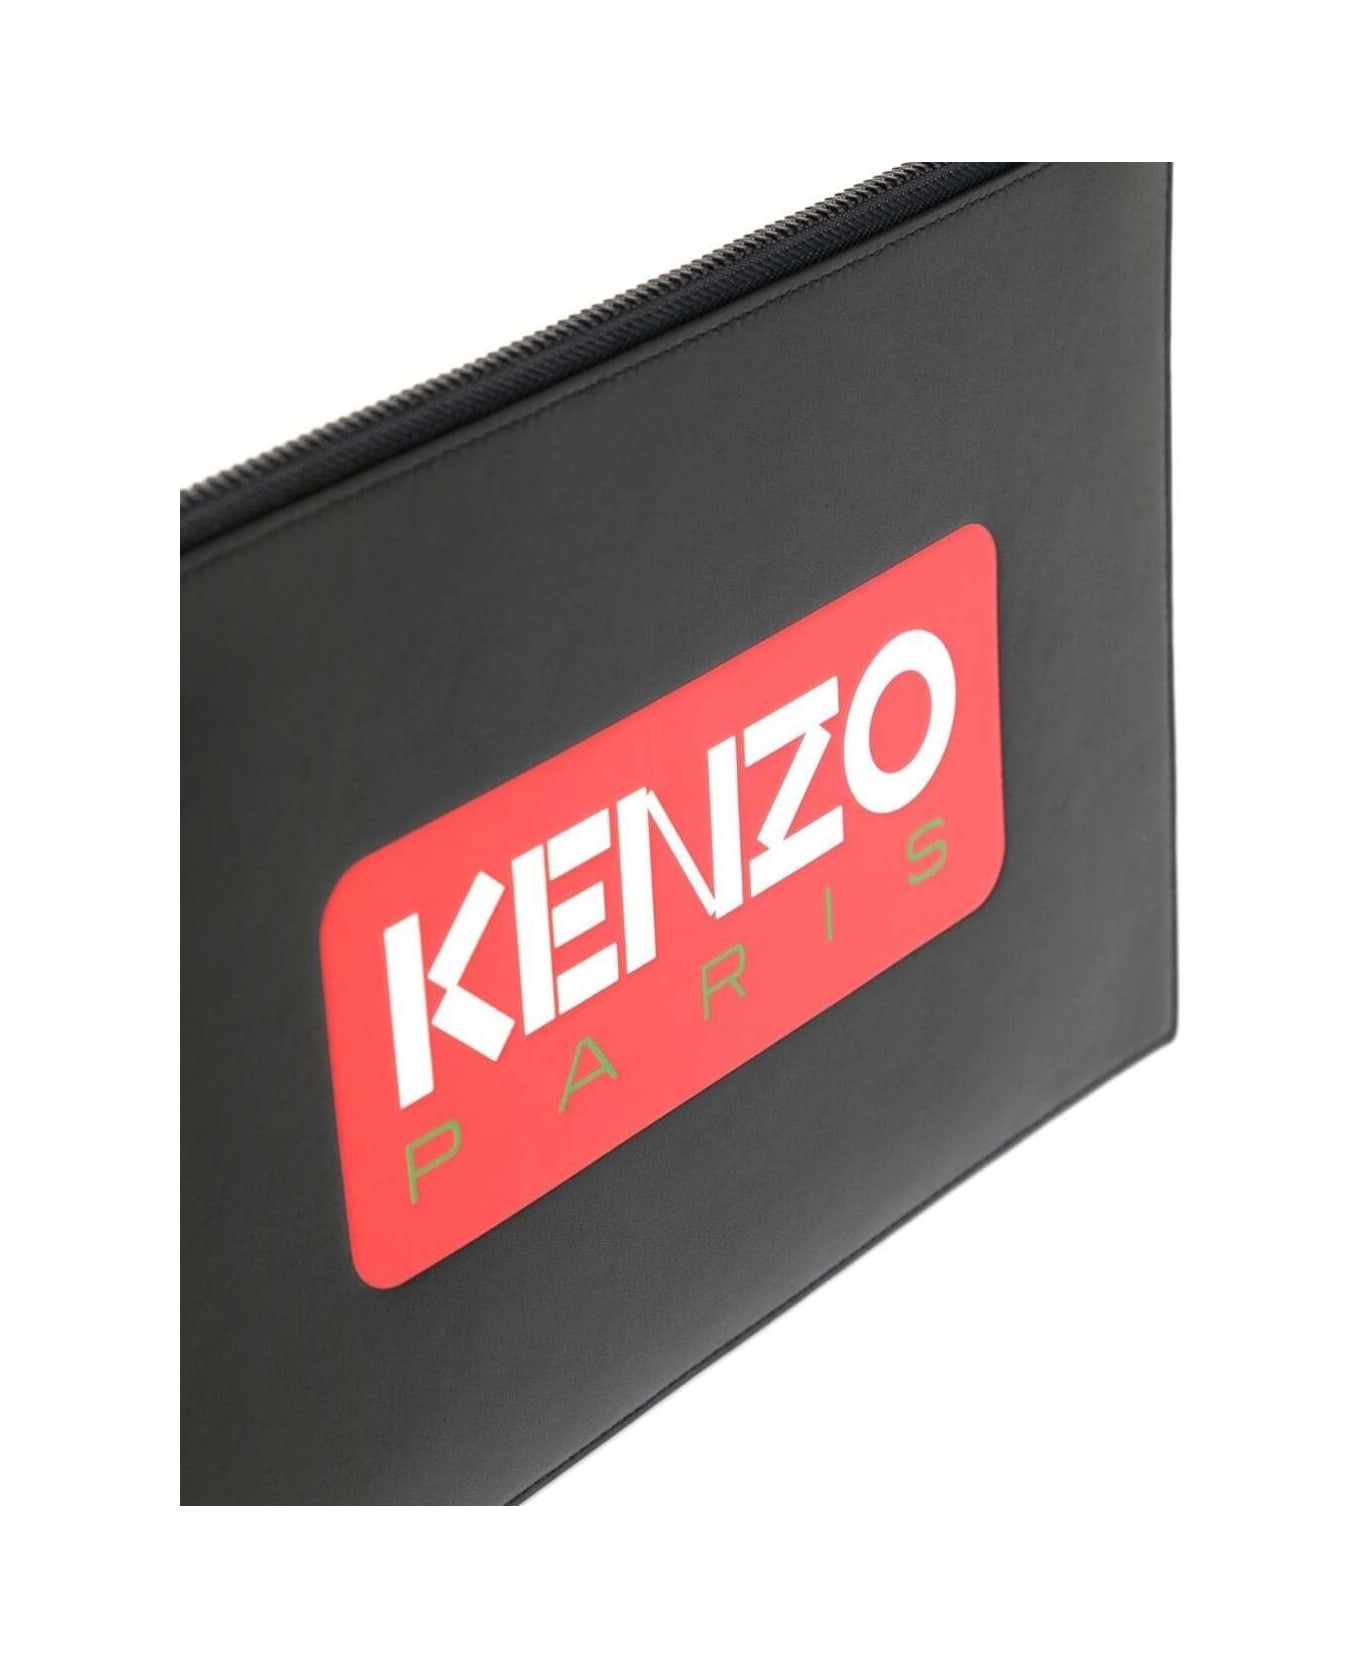 Kenzo Large Clutch - Black